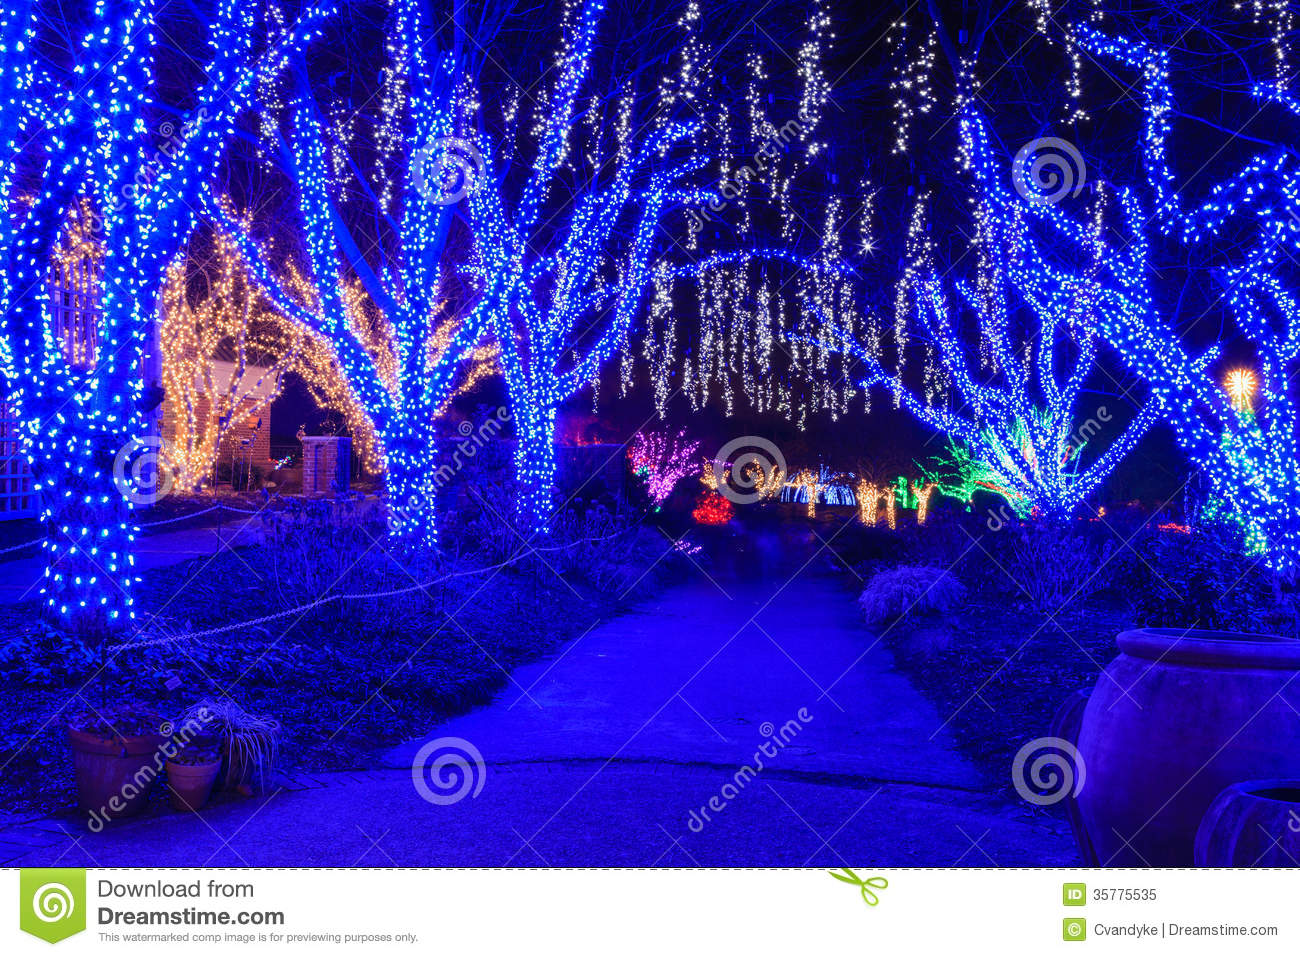 Meadowlark Botanical Gardens Christmas Lights